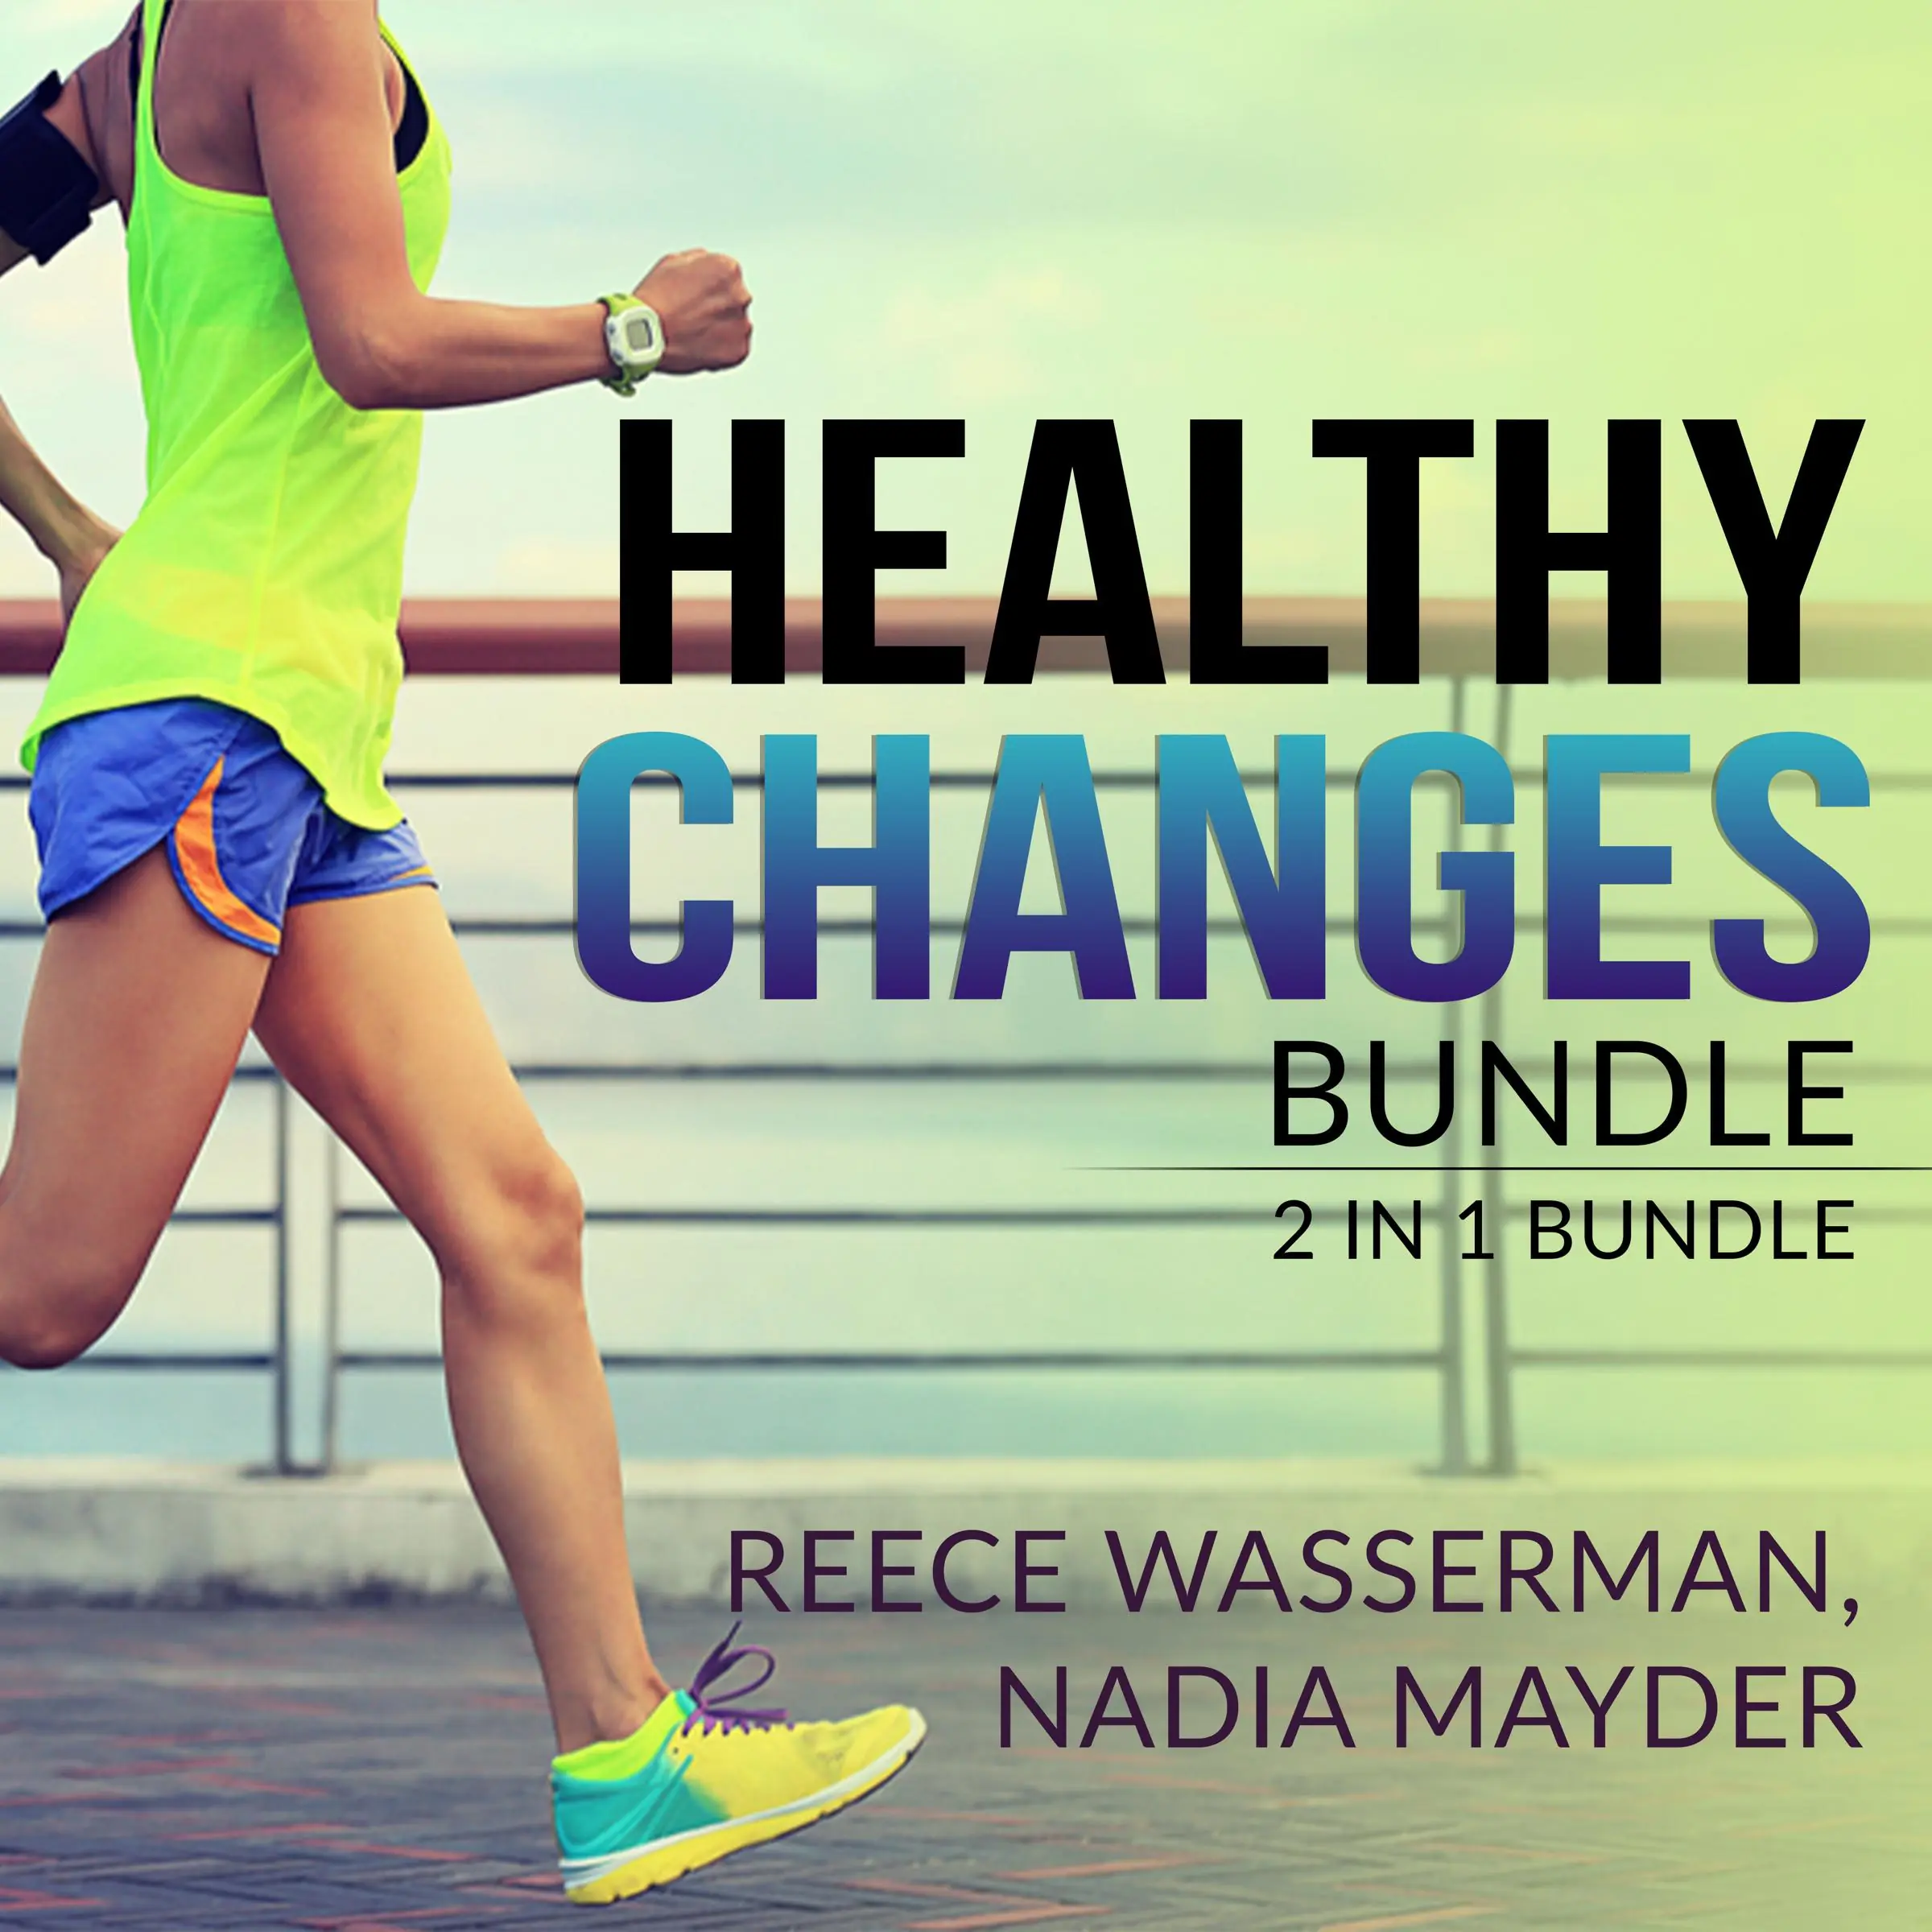 Healthy Changes Bundle: 2 in 1 Bundle, Sugar Detox, and Green Juicing Audiobook by Reece Wasserman and Nadia Mayder